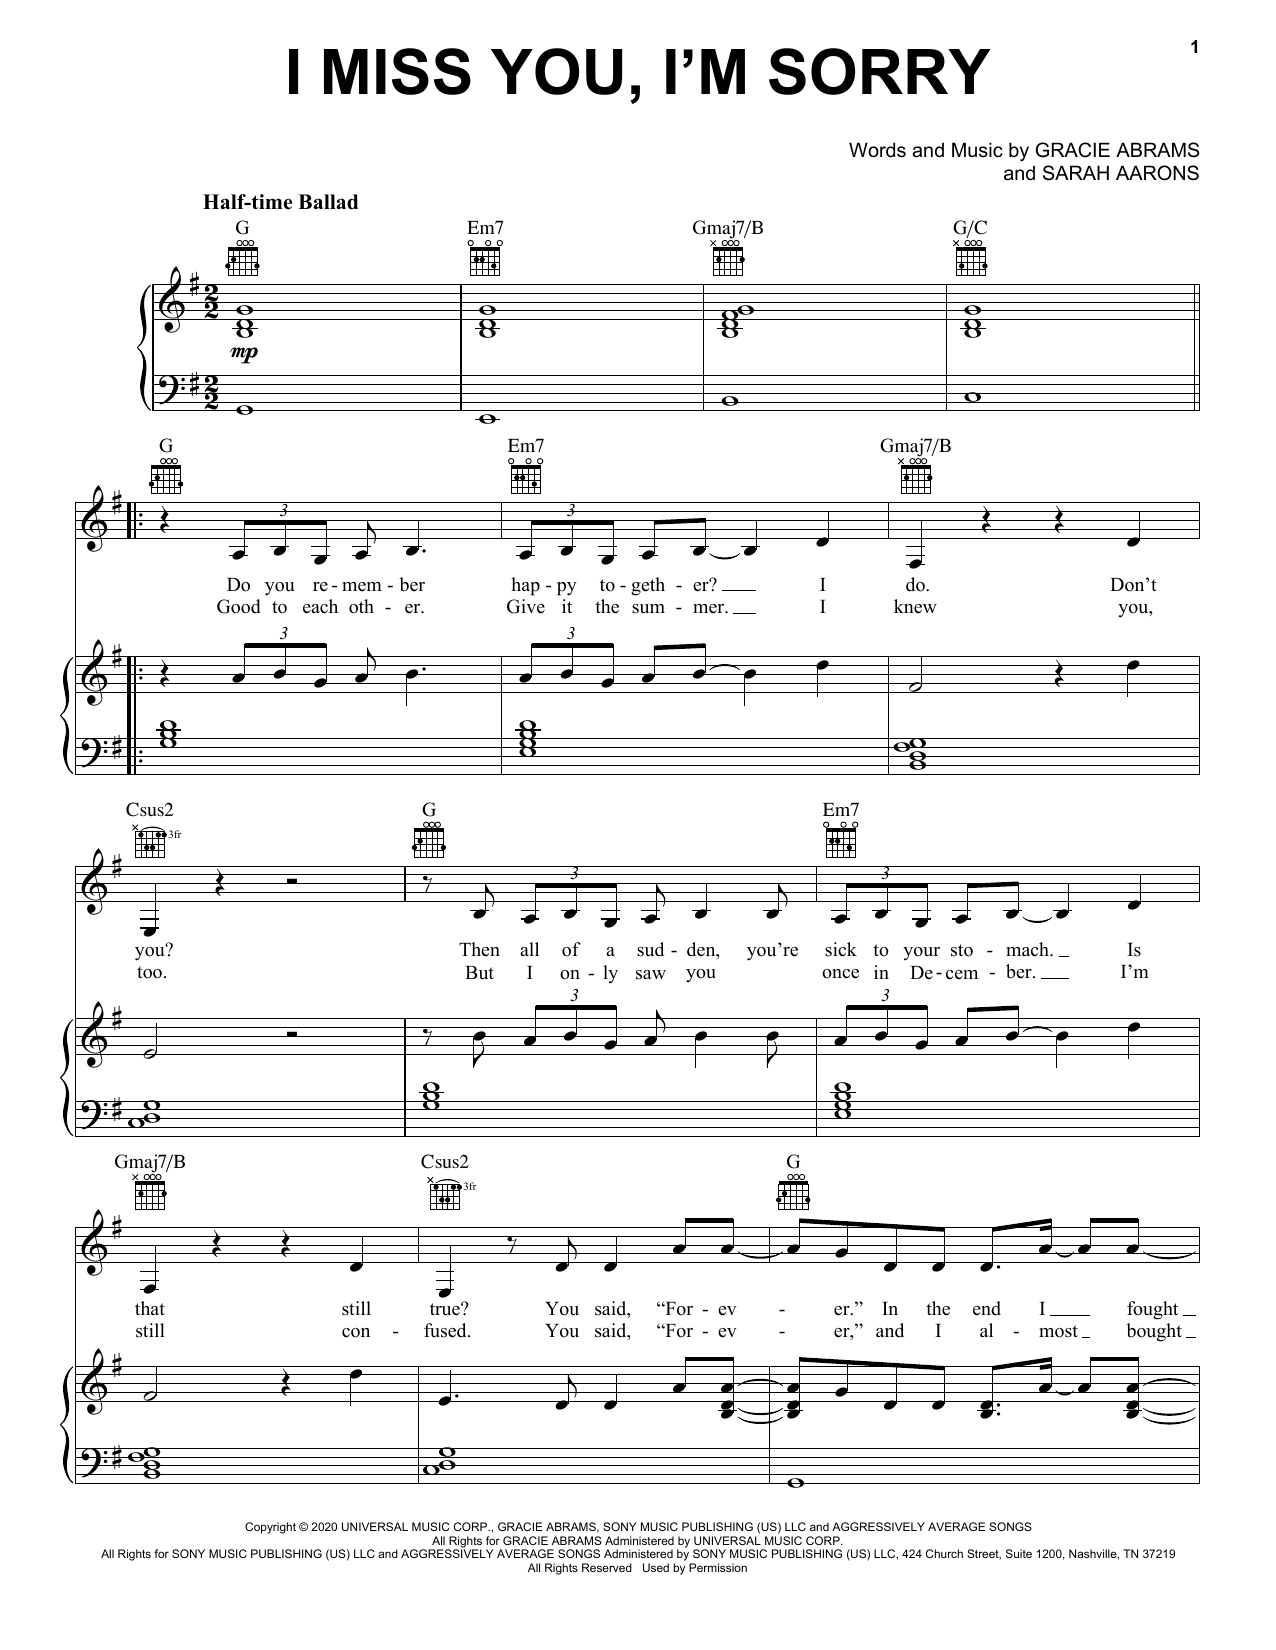 Gracie Abrams I miss you, I'm sorry sheet music notes printable PDF score